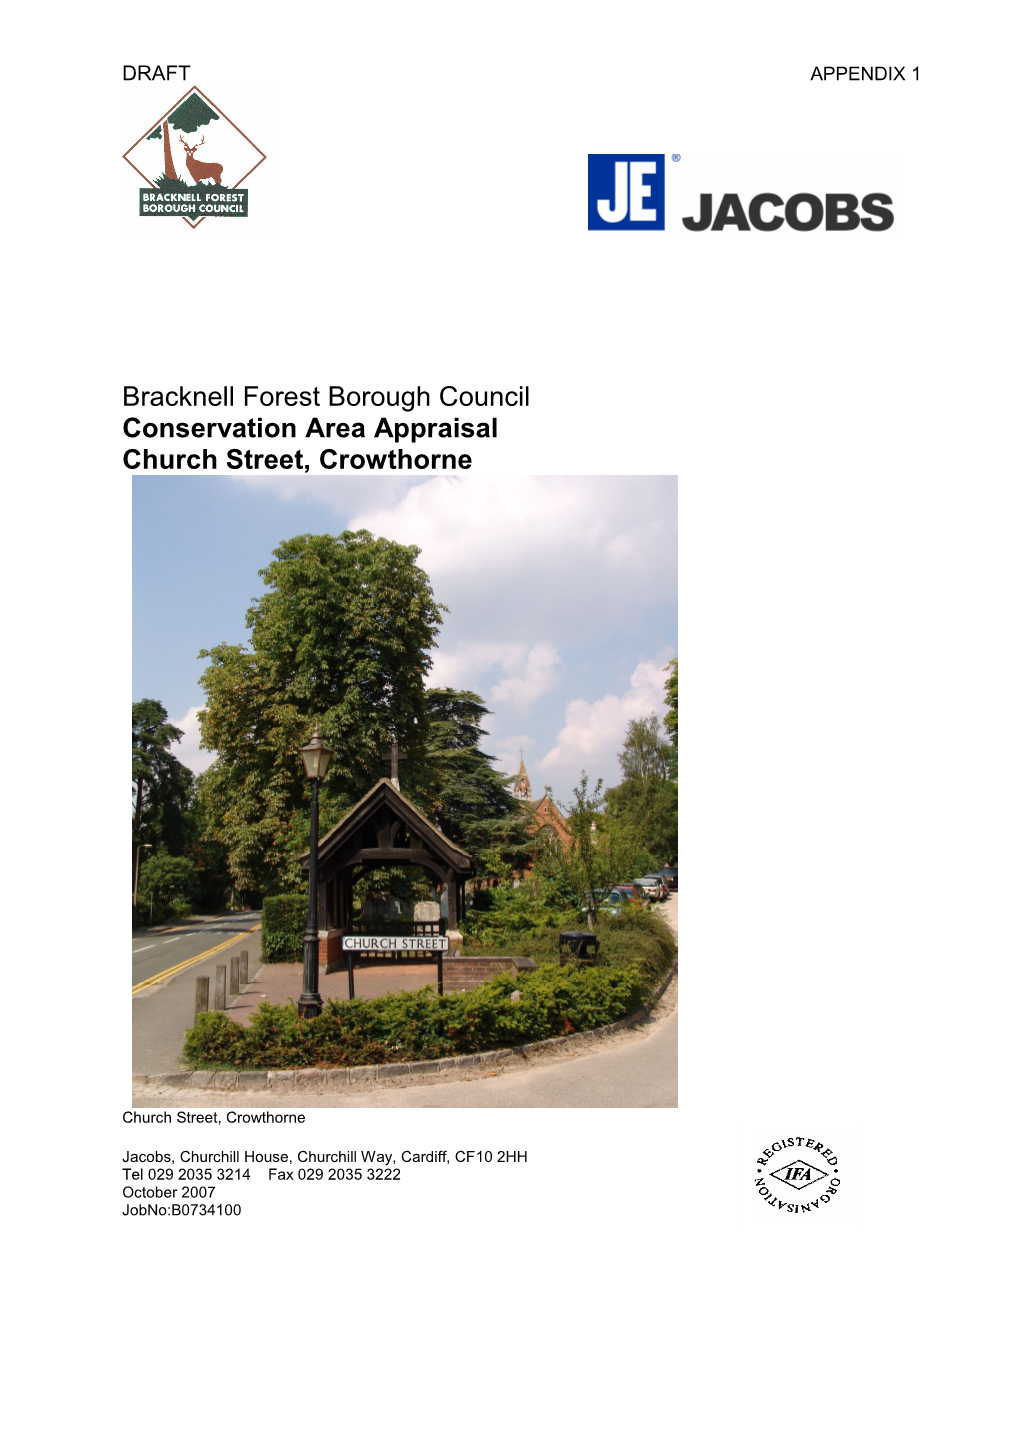 Bracknell Forest Borough Council Conservation Area Appraisal Church Street, Crowthorne